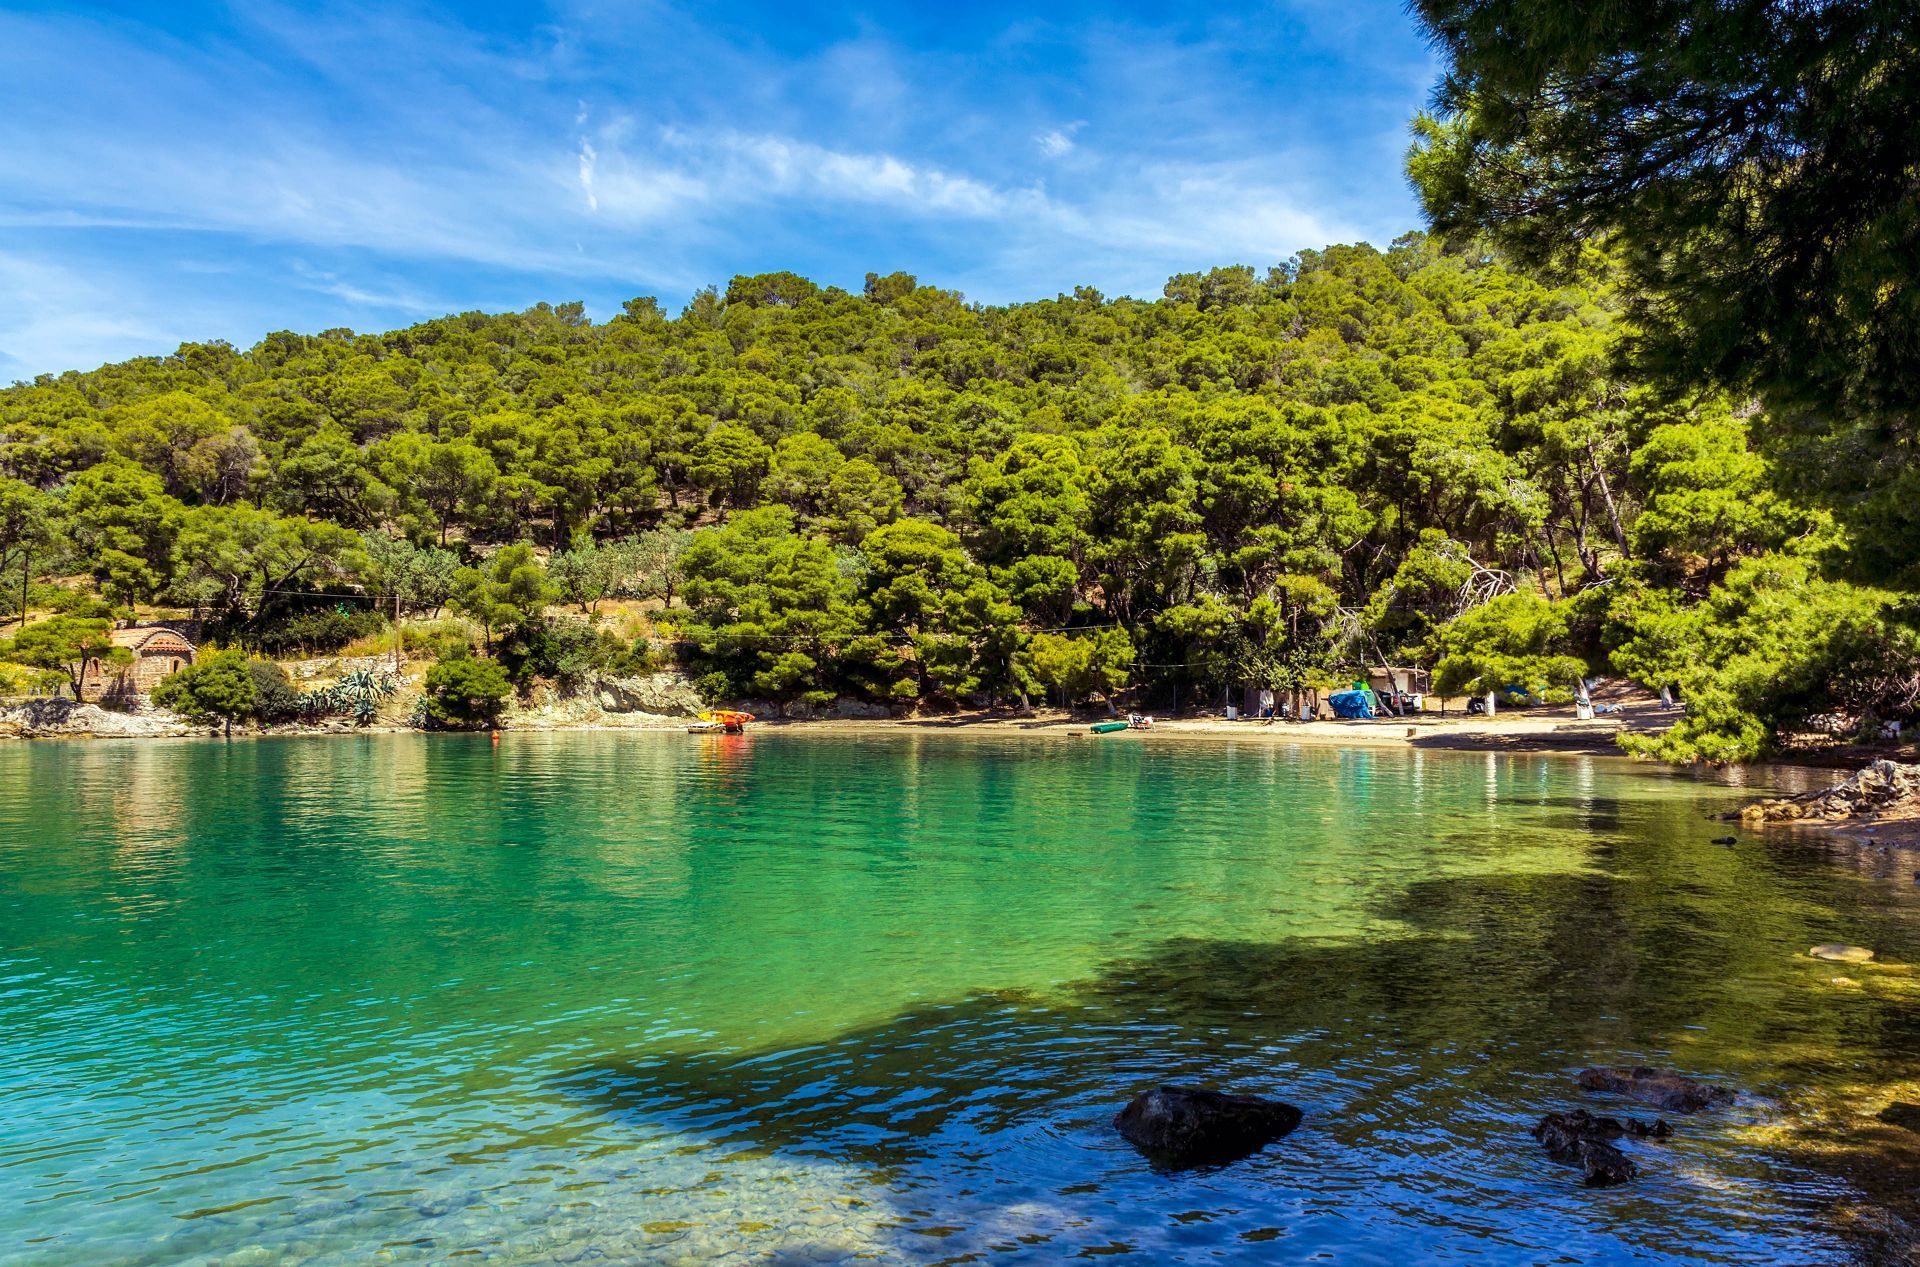 Saronic islands: Love bay beach on Poros island